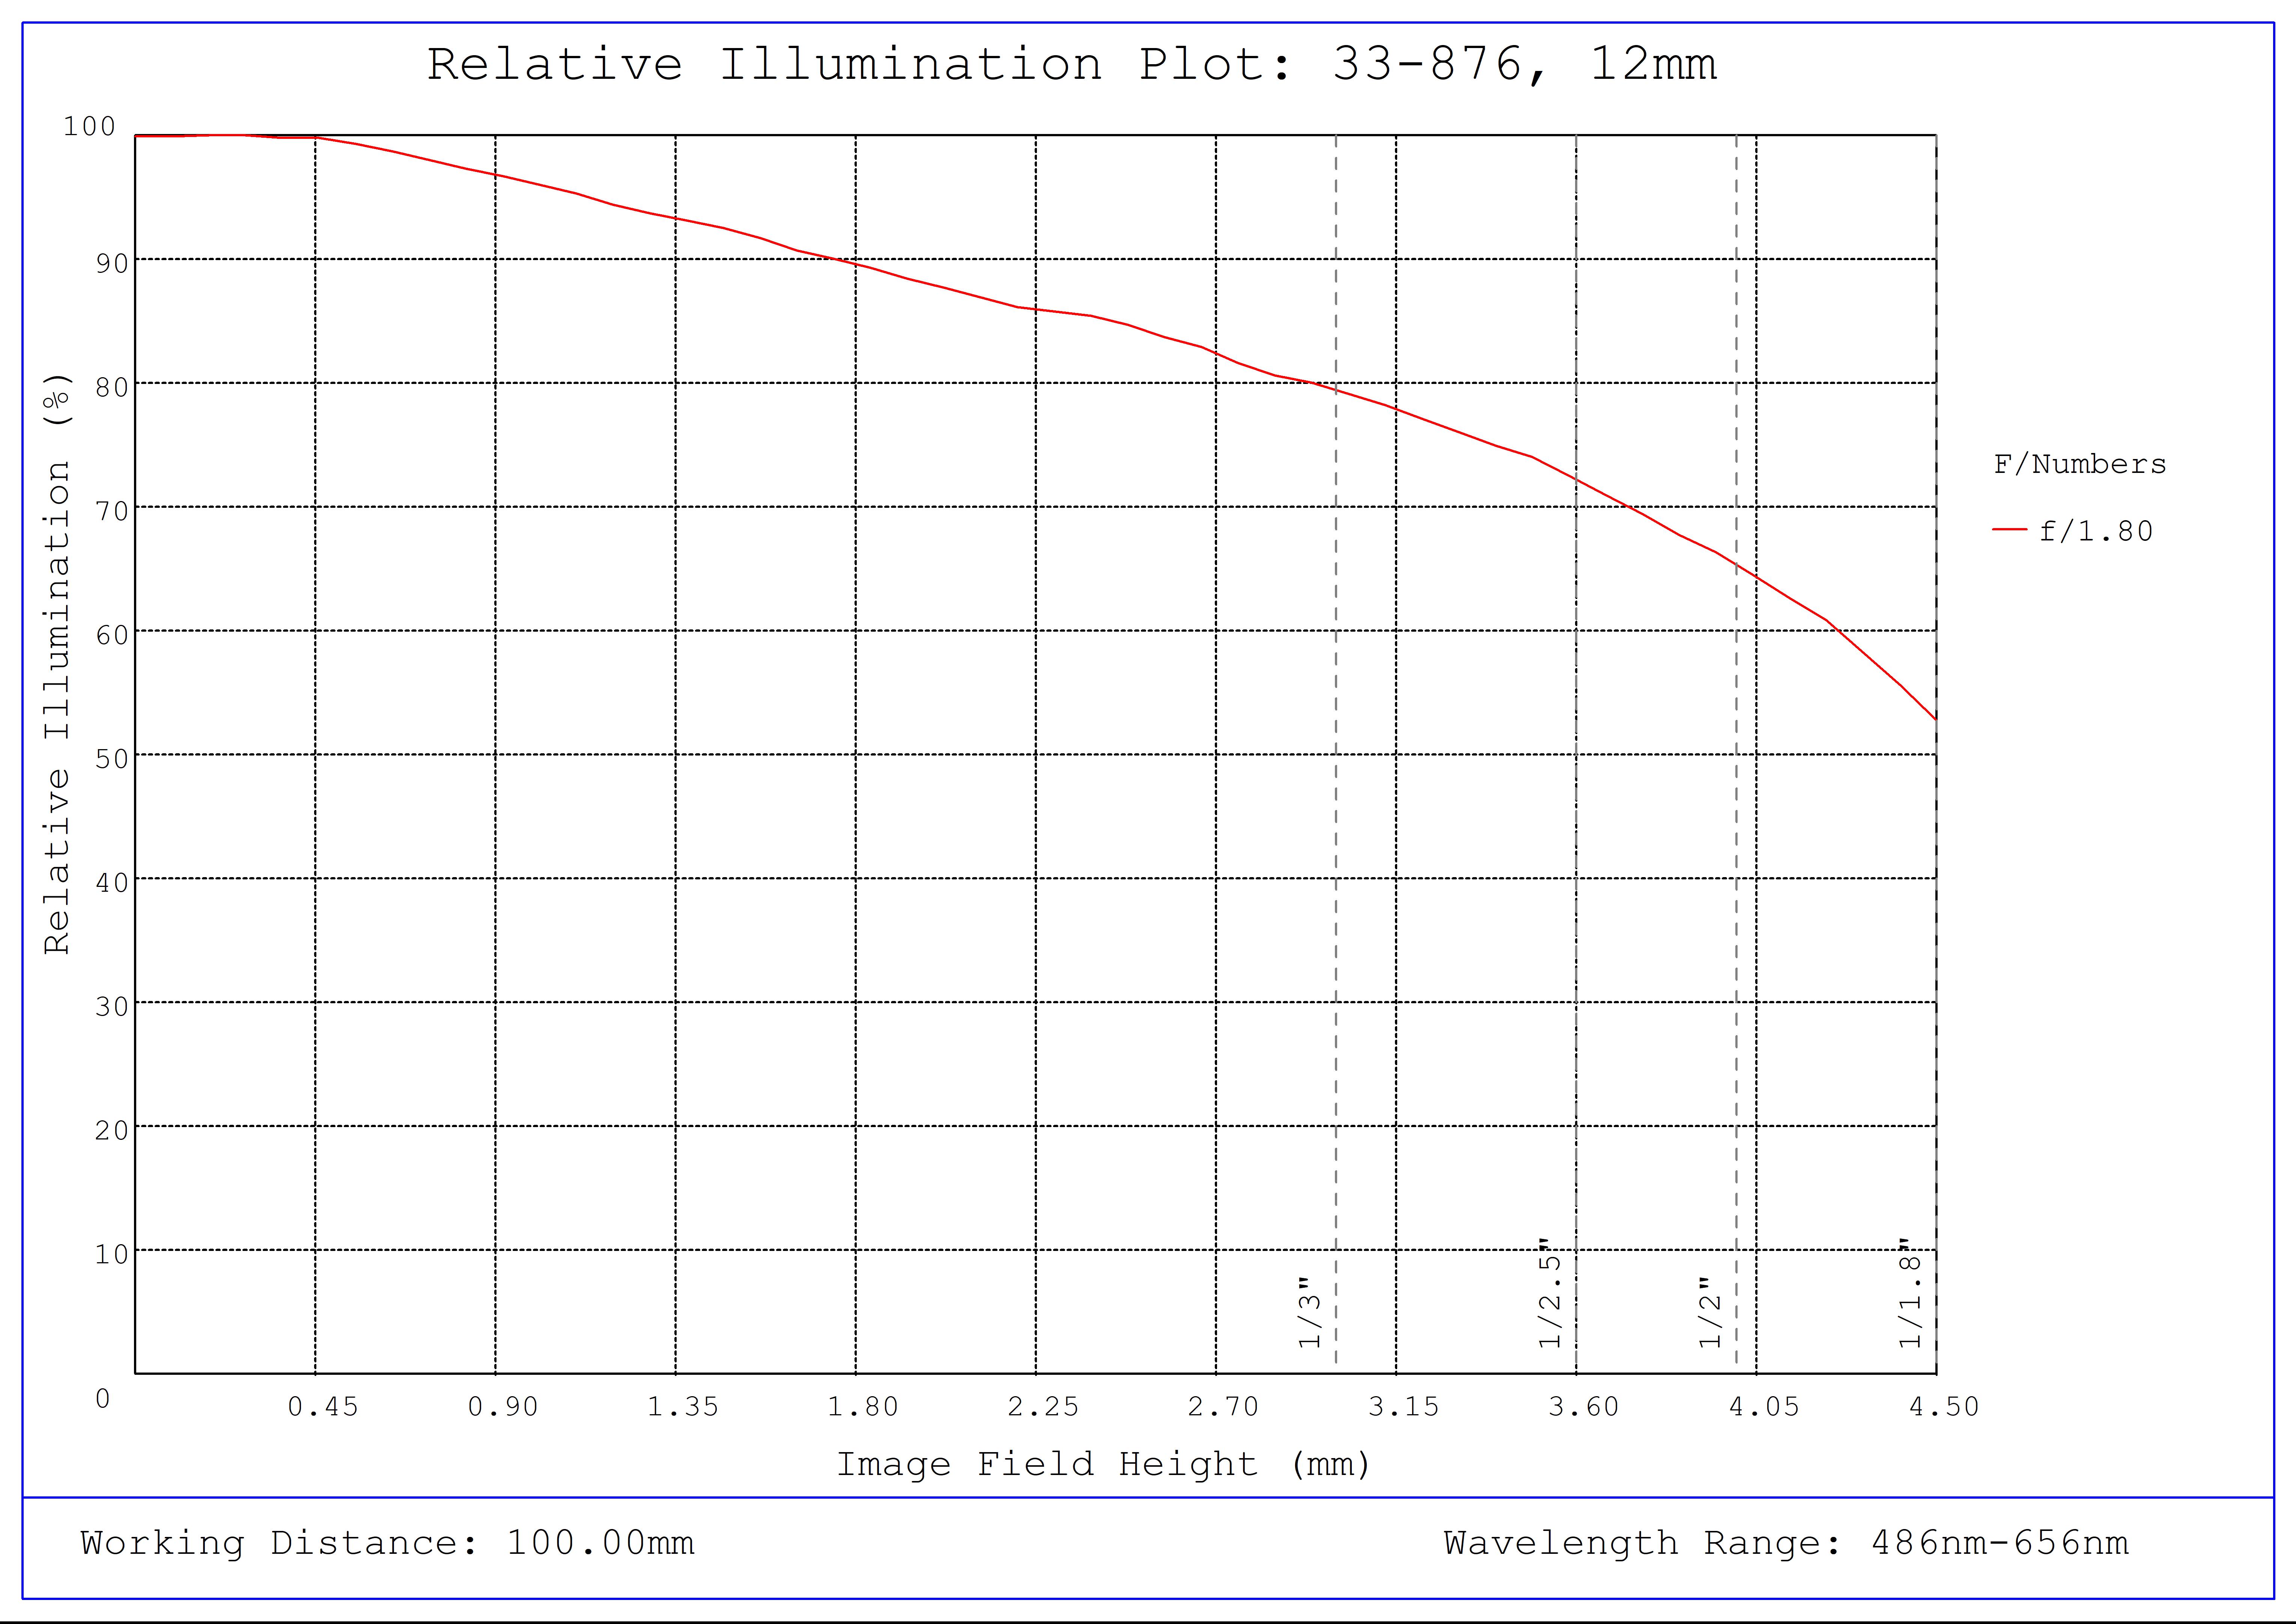 #33-876, 12mm, f/1.8 UCi Series Fixed Focal Length Lens, Relative Illumination Plot